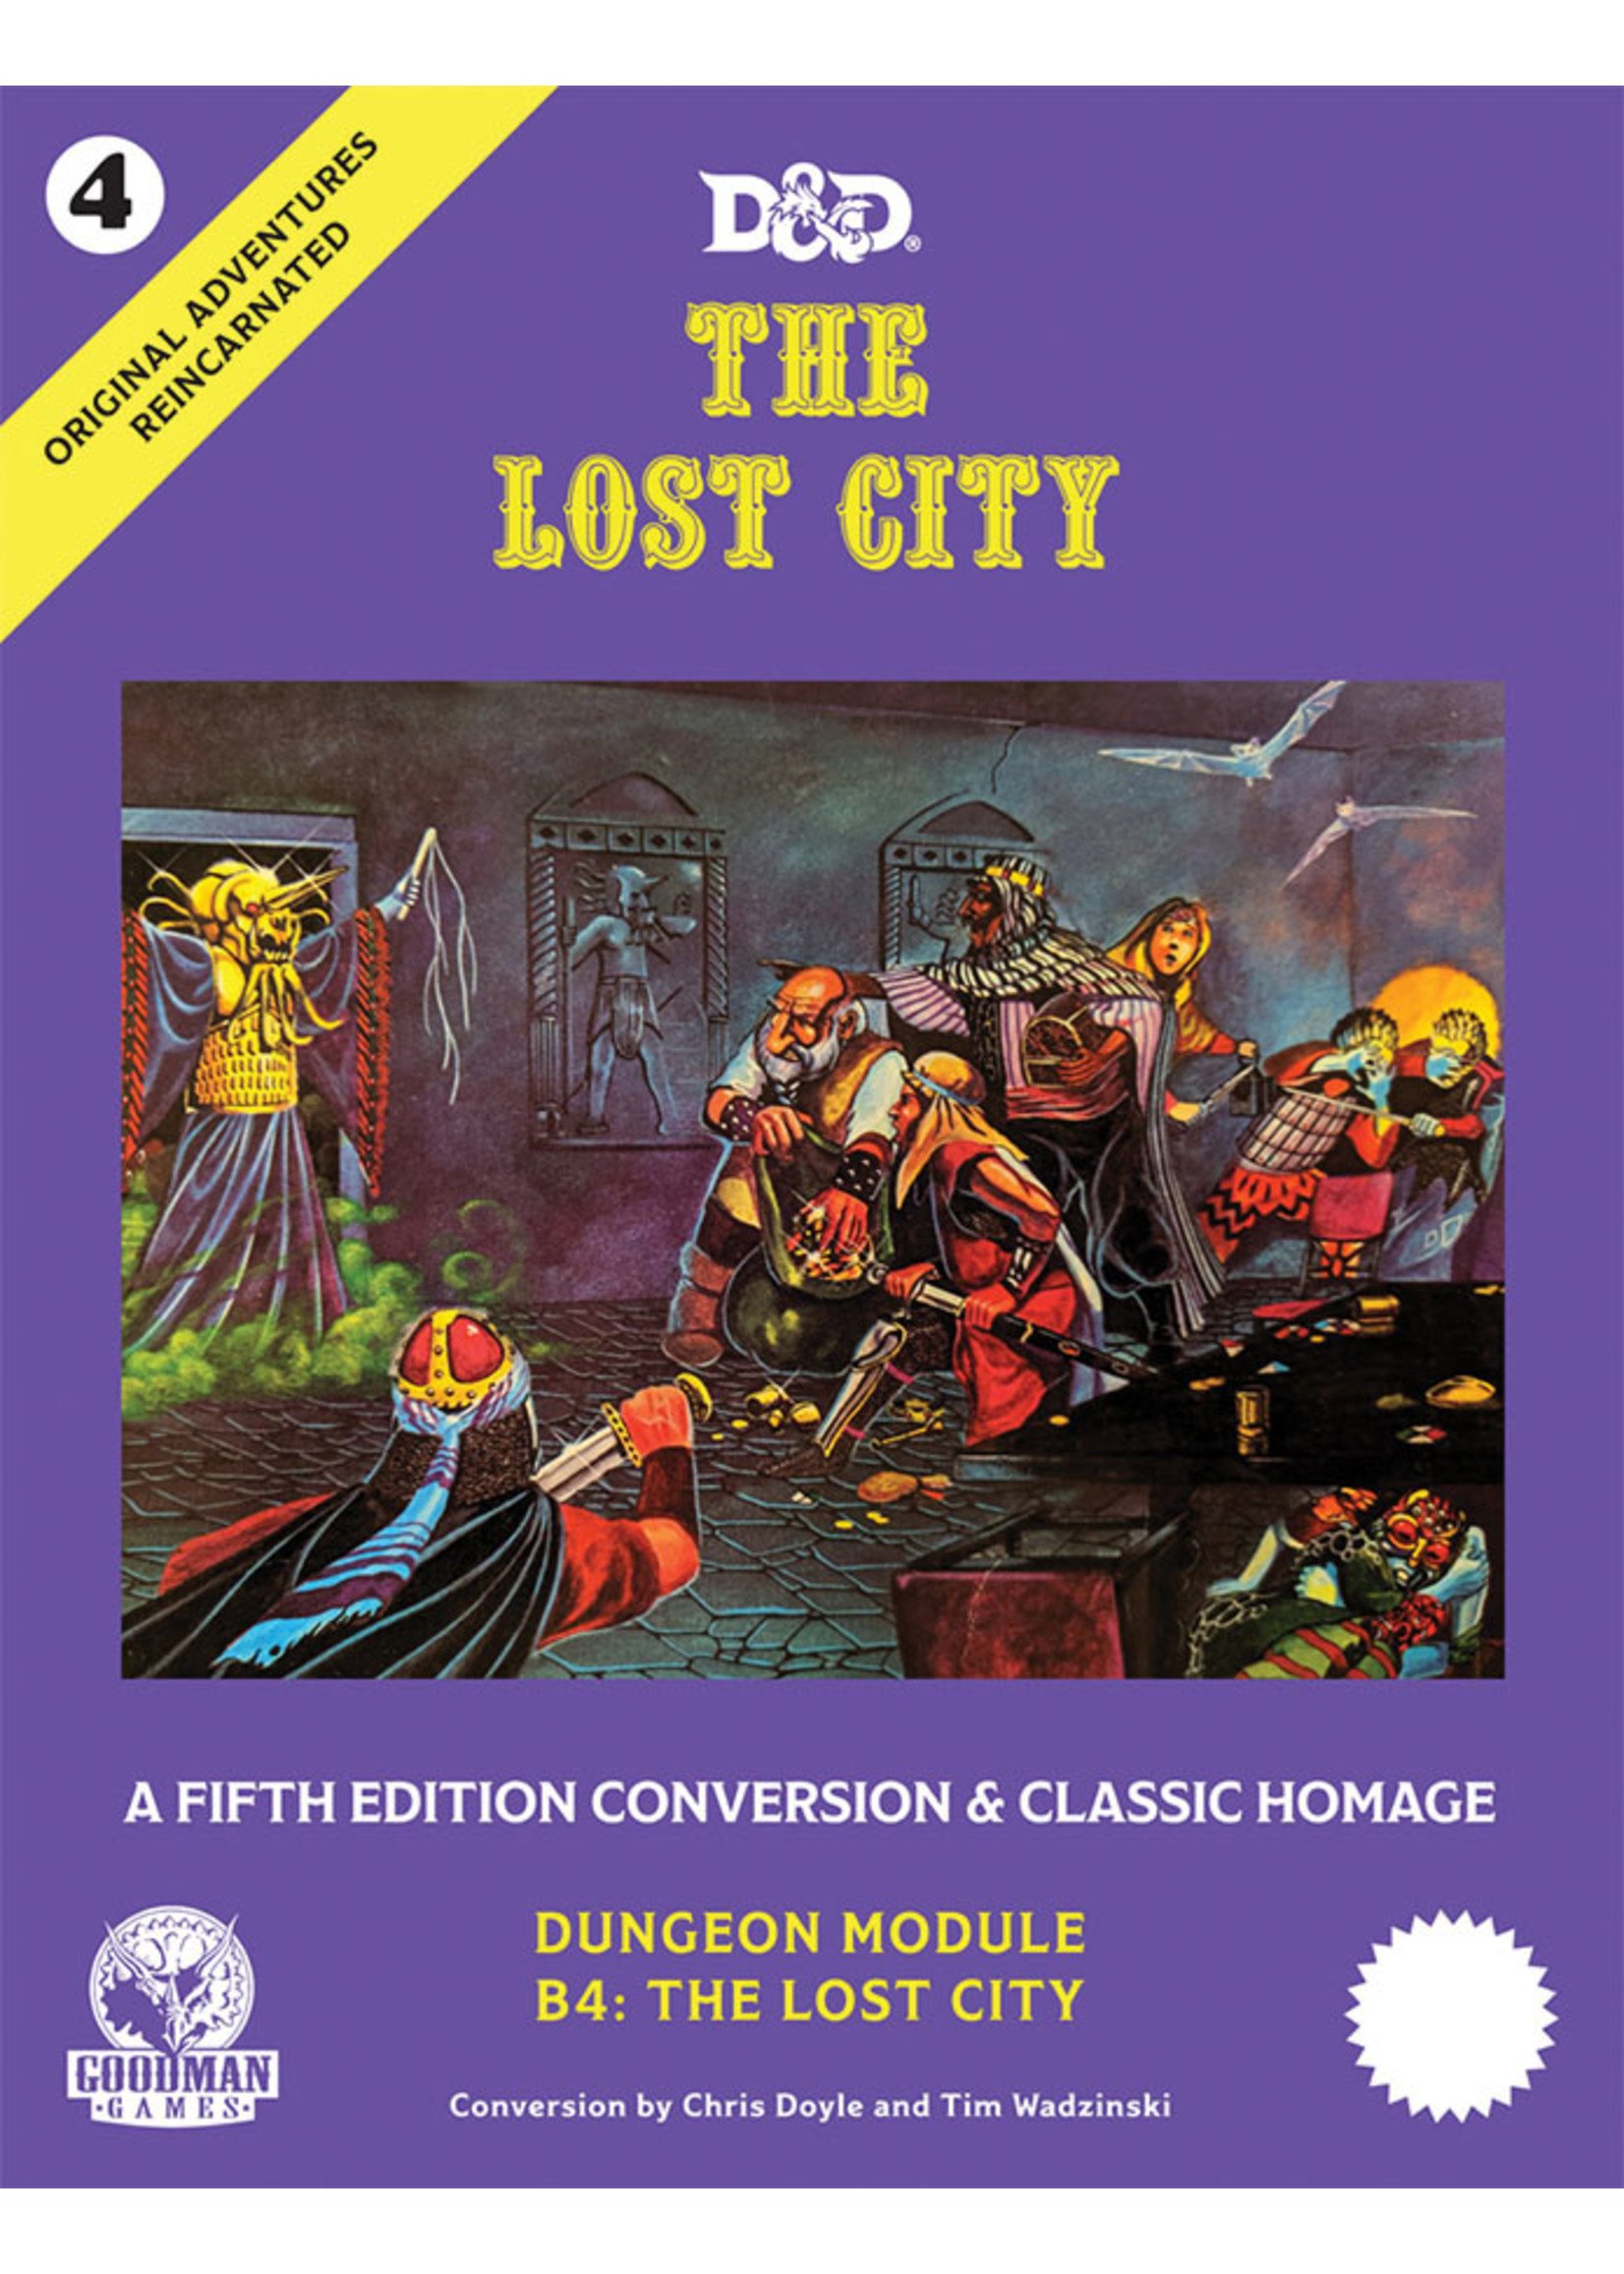 D&D: Original Adventures Reincarnated #4 - The Lost City